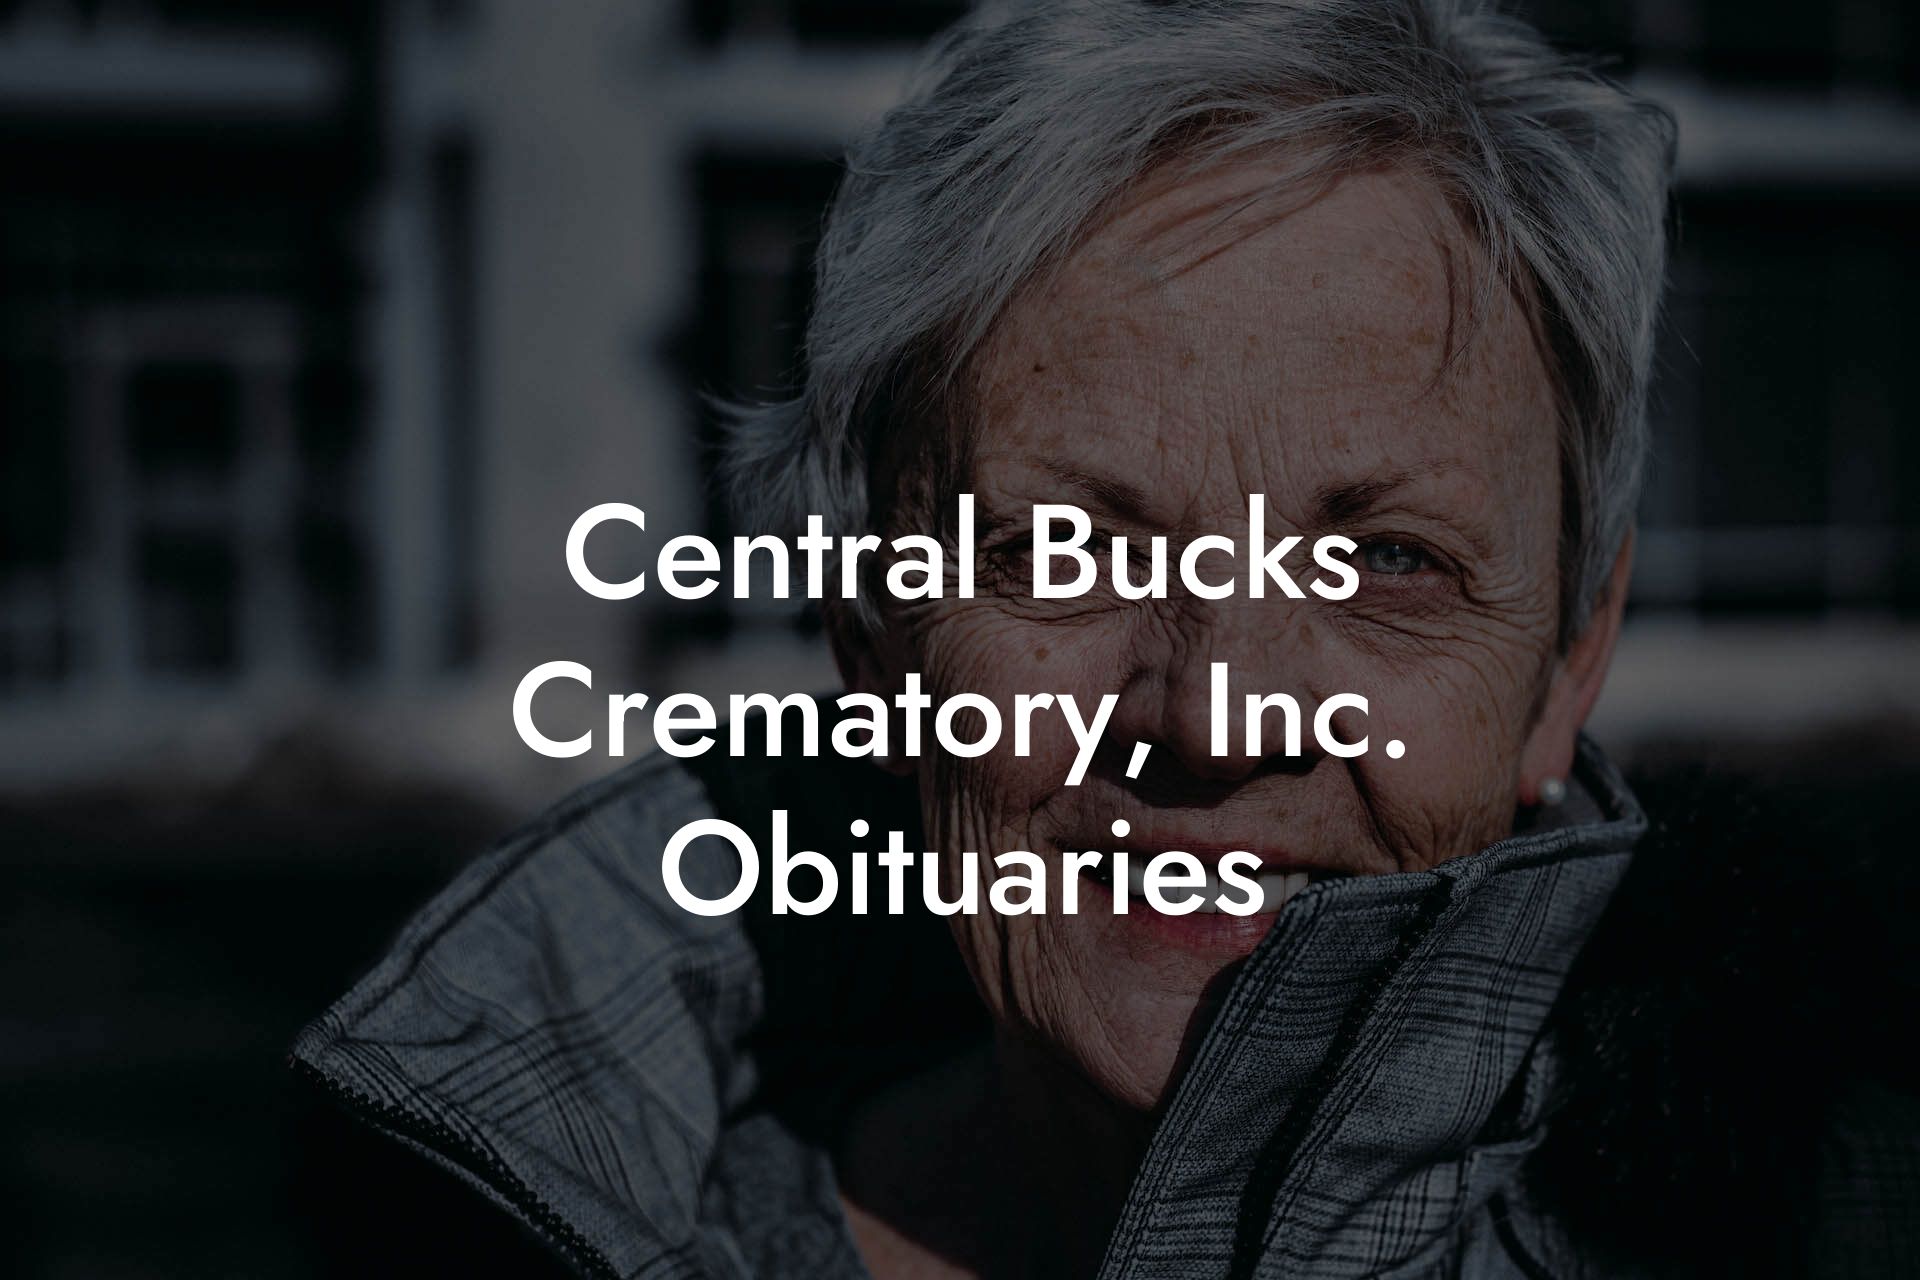 Central Bucks Crematory, Inc. Obituaries